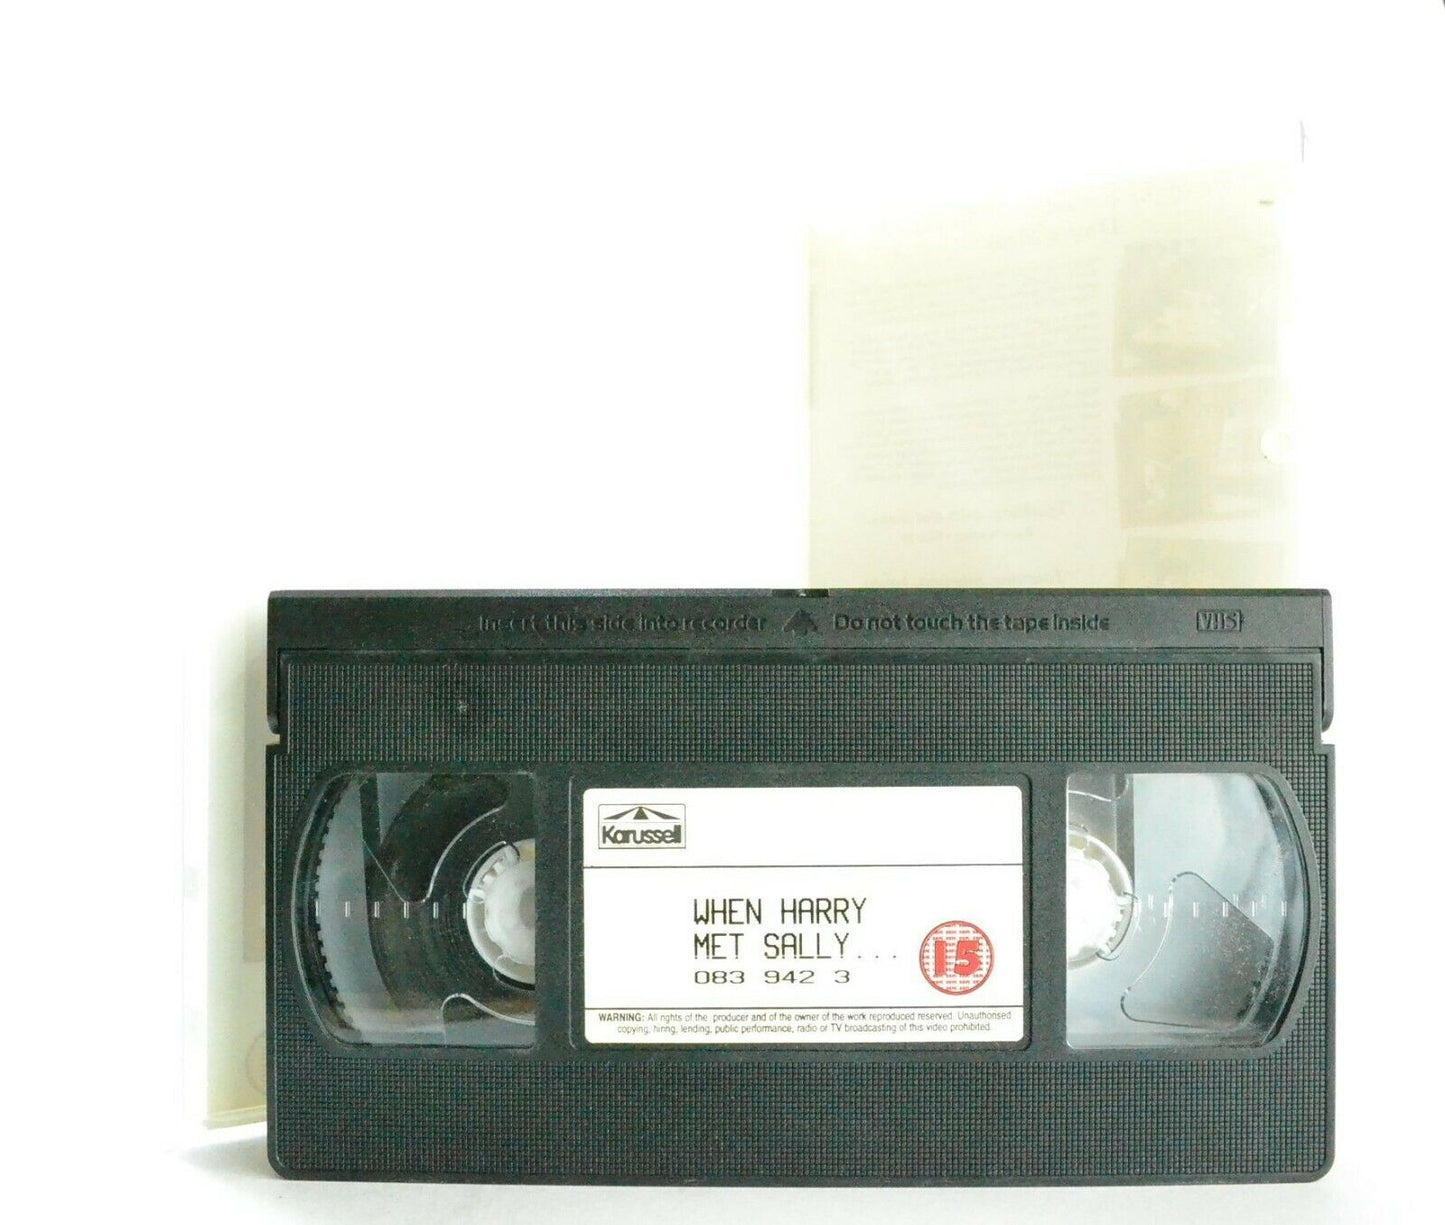 When Harry Met Sally: A R.Reiner Film - Romantic Comedy - B.Crystal/M.Ryan - VHS-